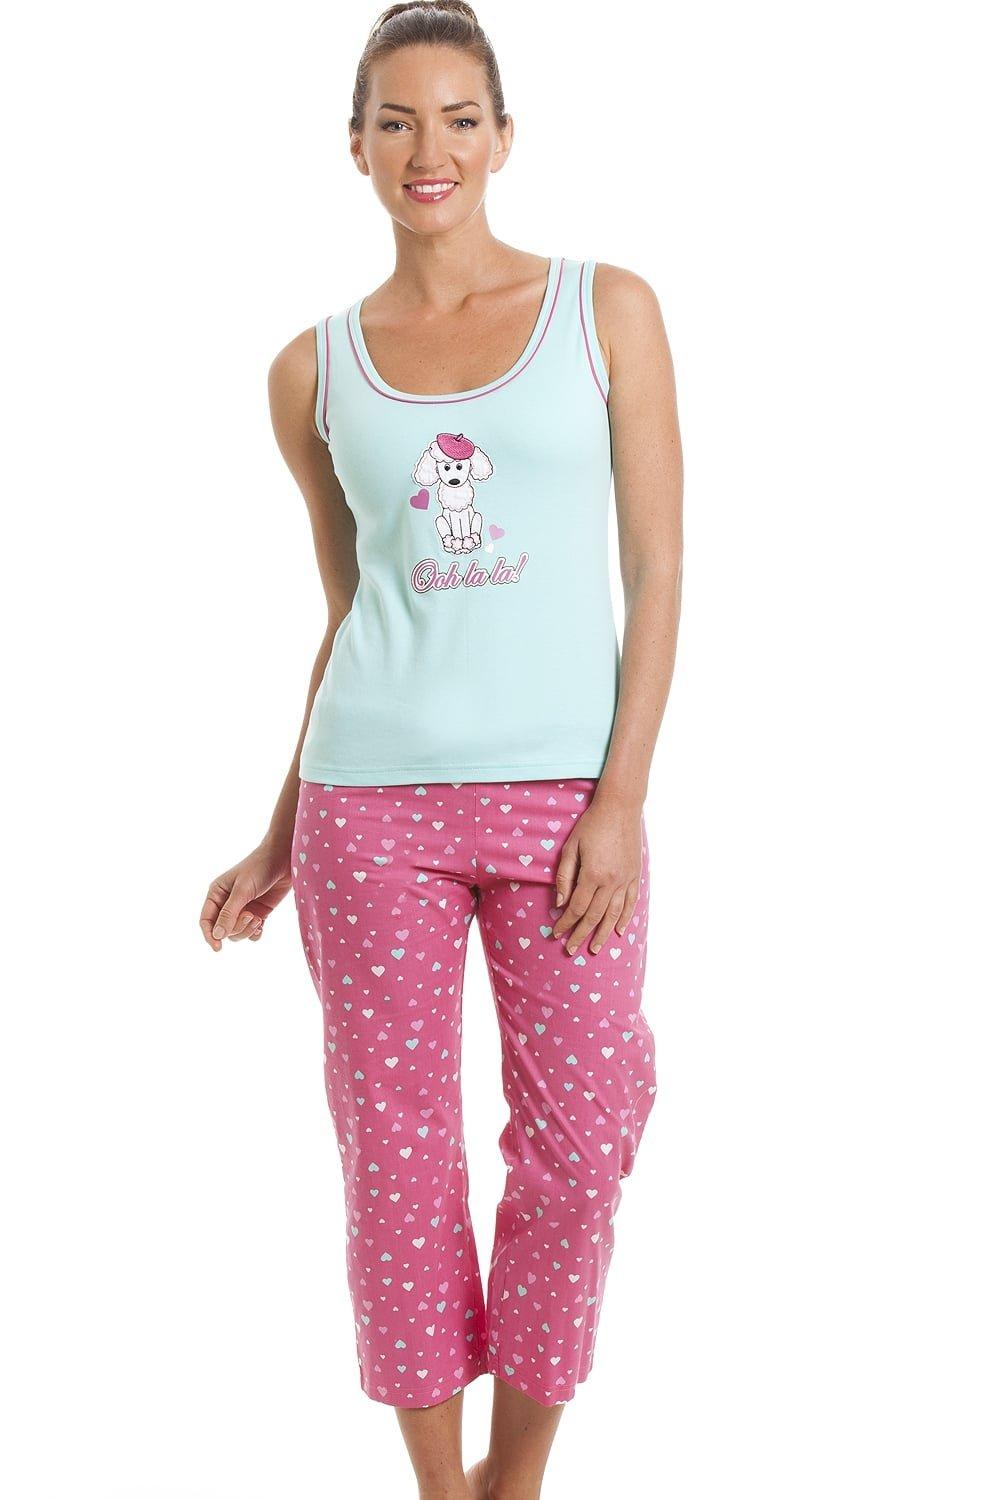 Poodle Character Capri Cotton Pyjama Set